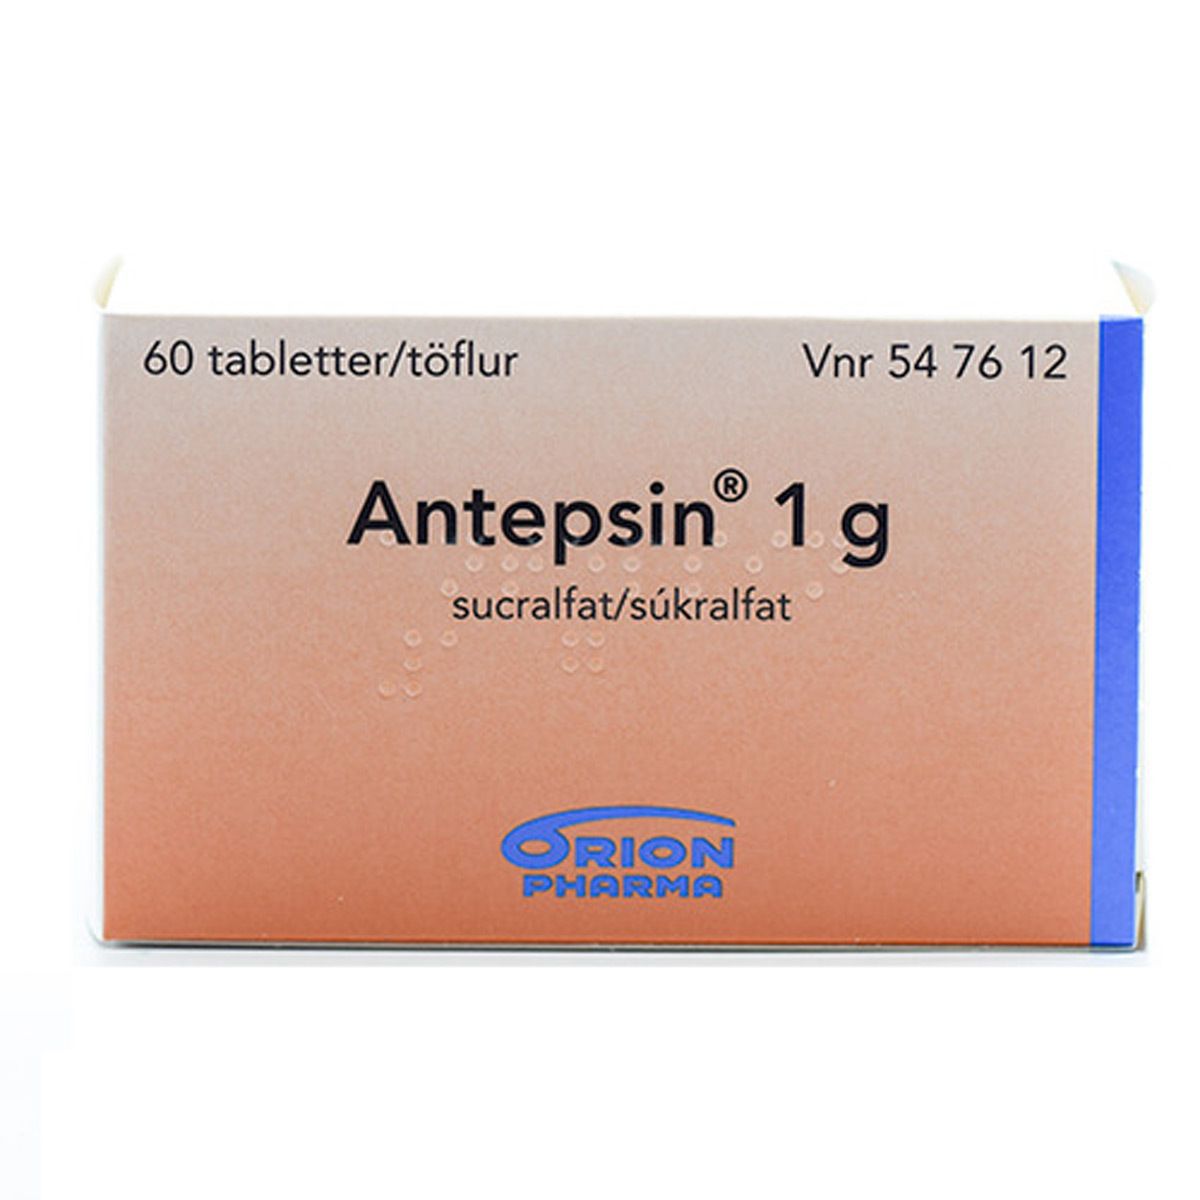 Antepsin 1 g - - Med24.dk